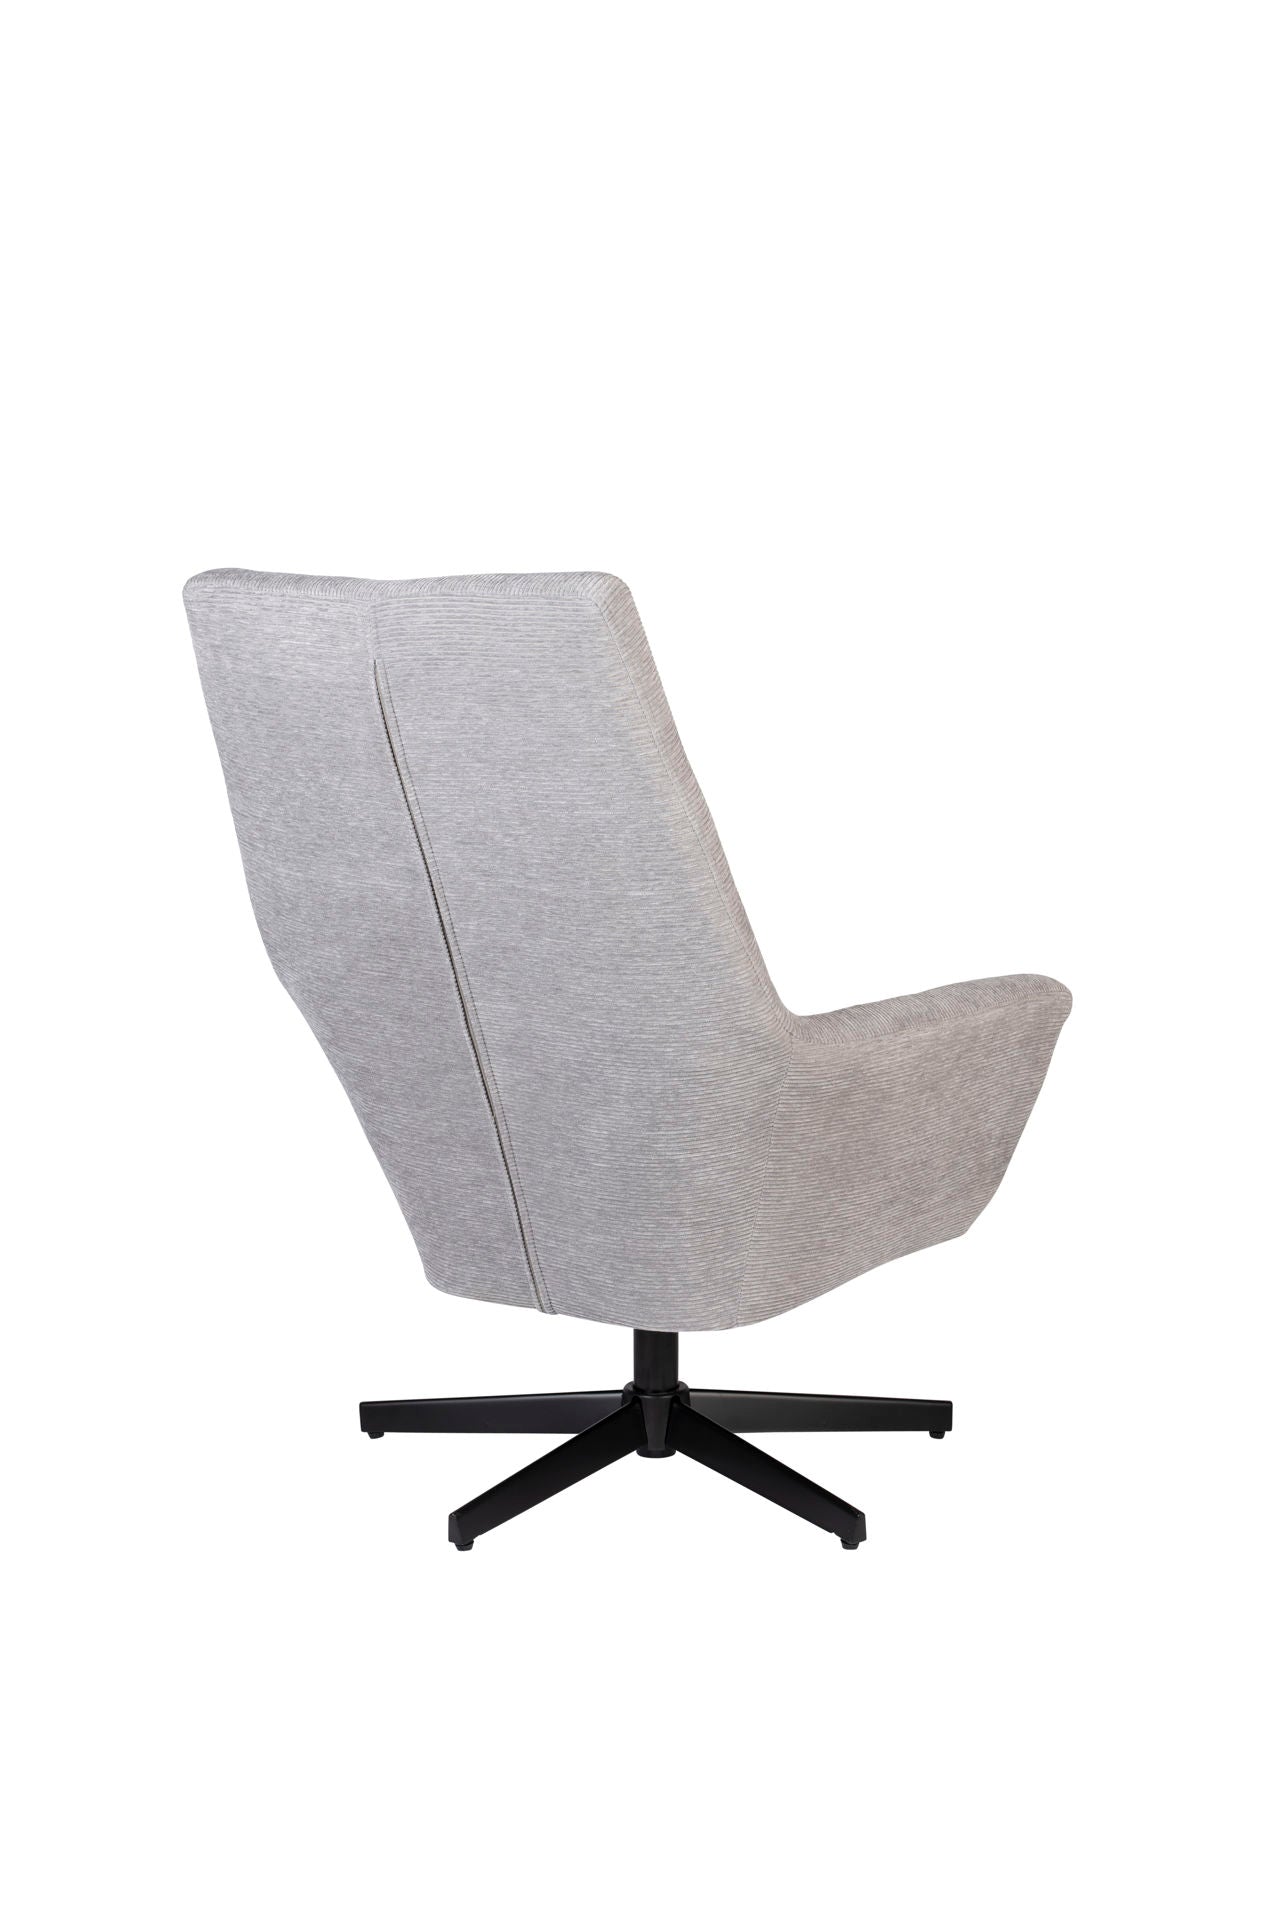 Nancy's Beachwood Lounge Chair - Industrial - Light gray - Polyester, Plywood, Iron - 79 cm x 76 cm x 98 cm